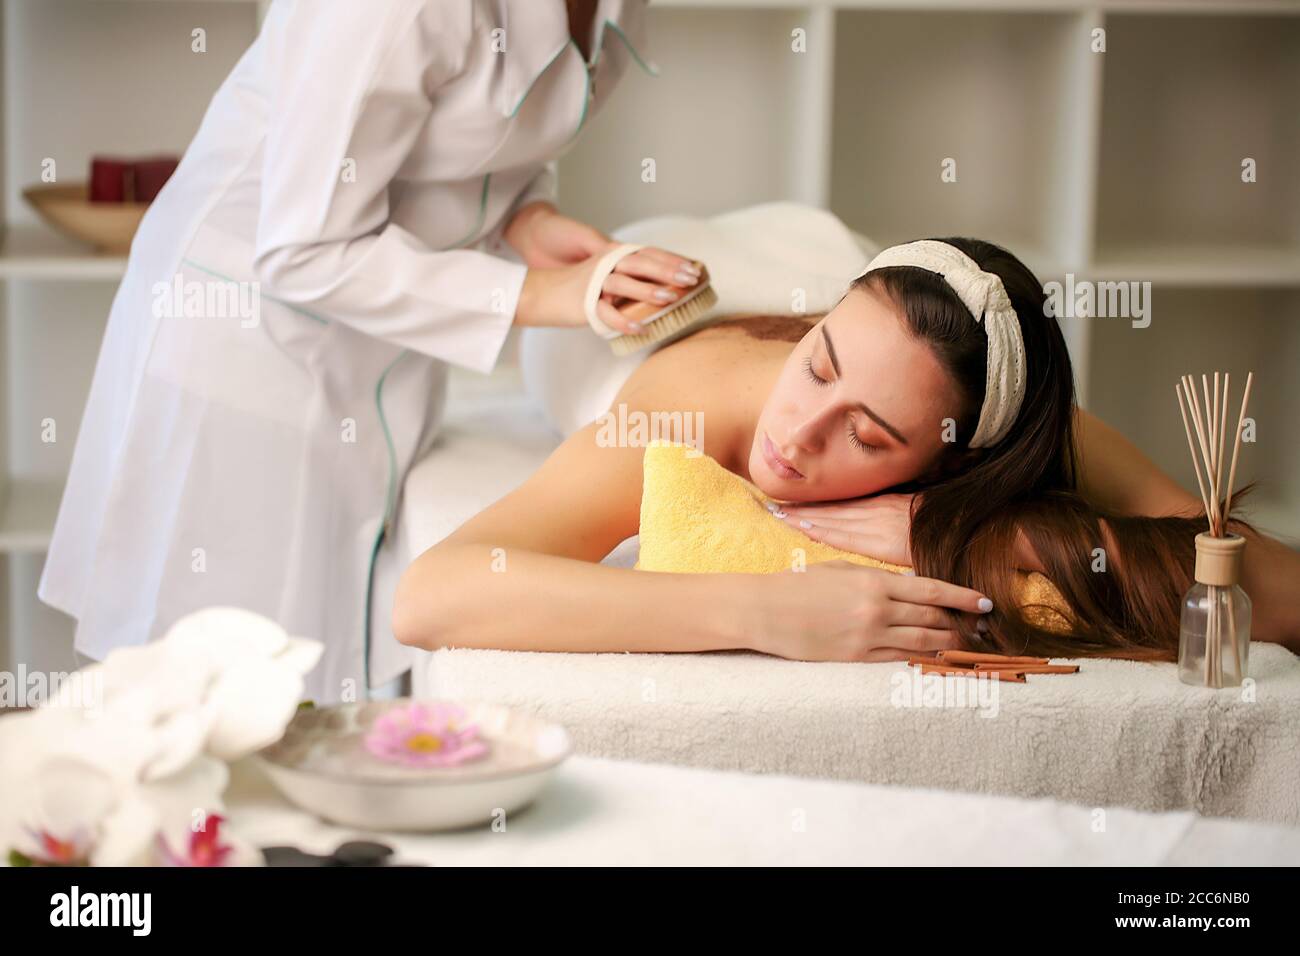 Woman enjoying a salt scrub massage at the health spa Stock Photo